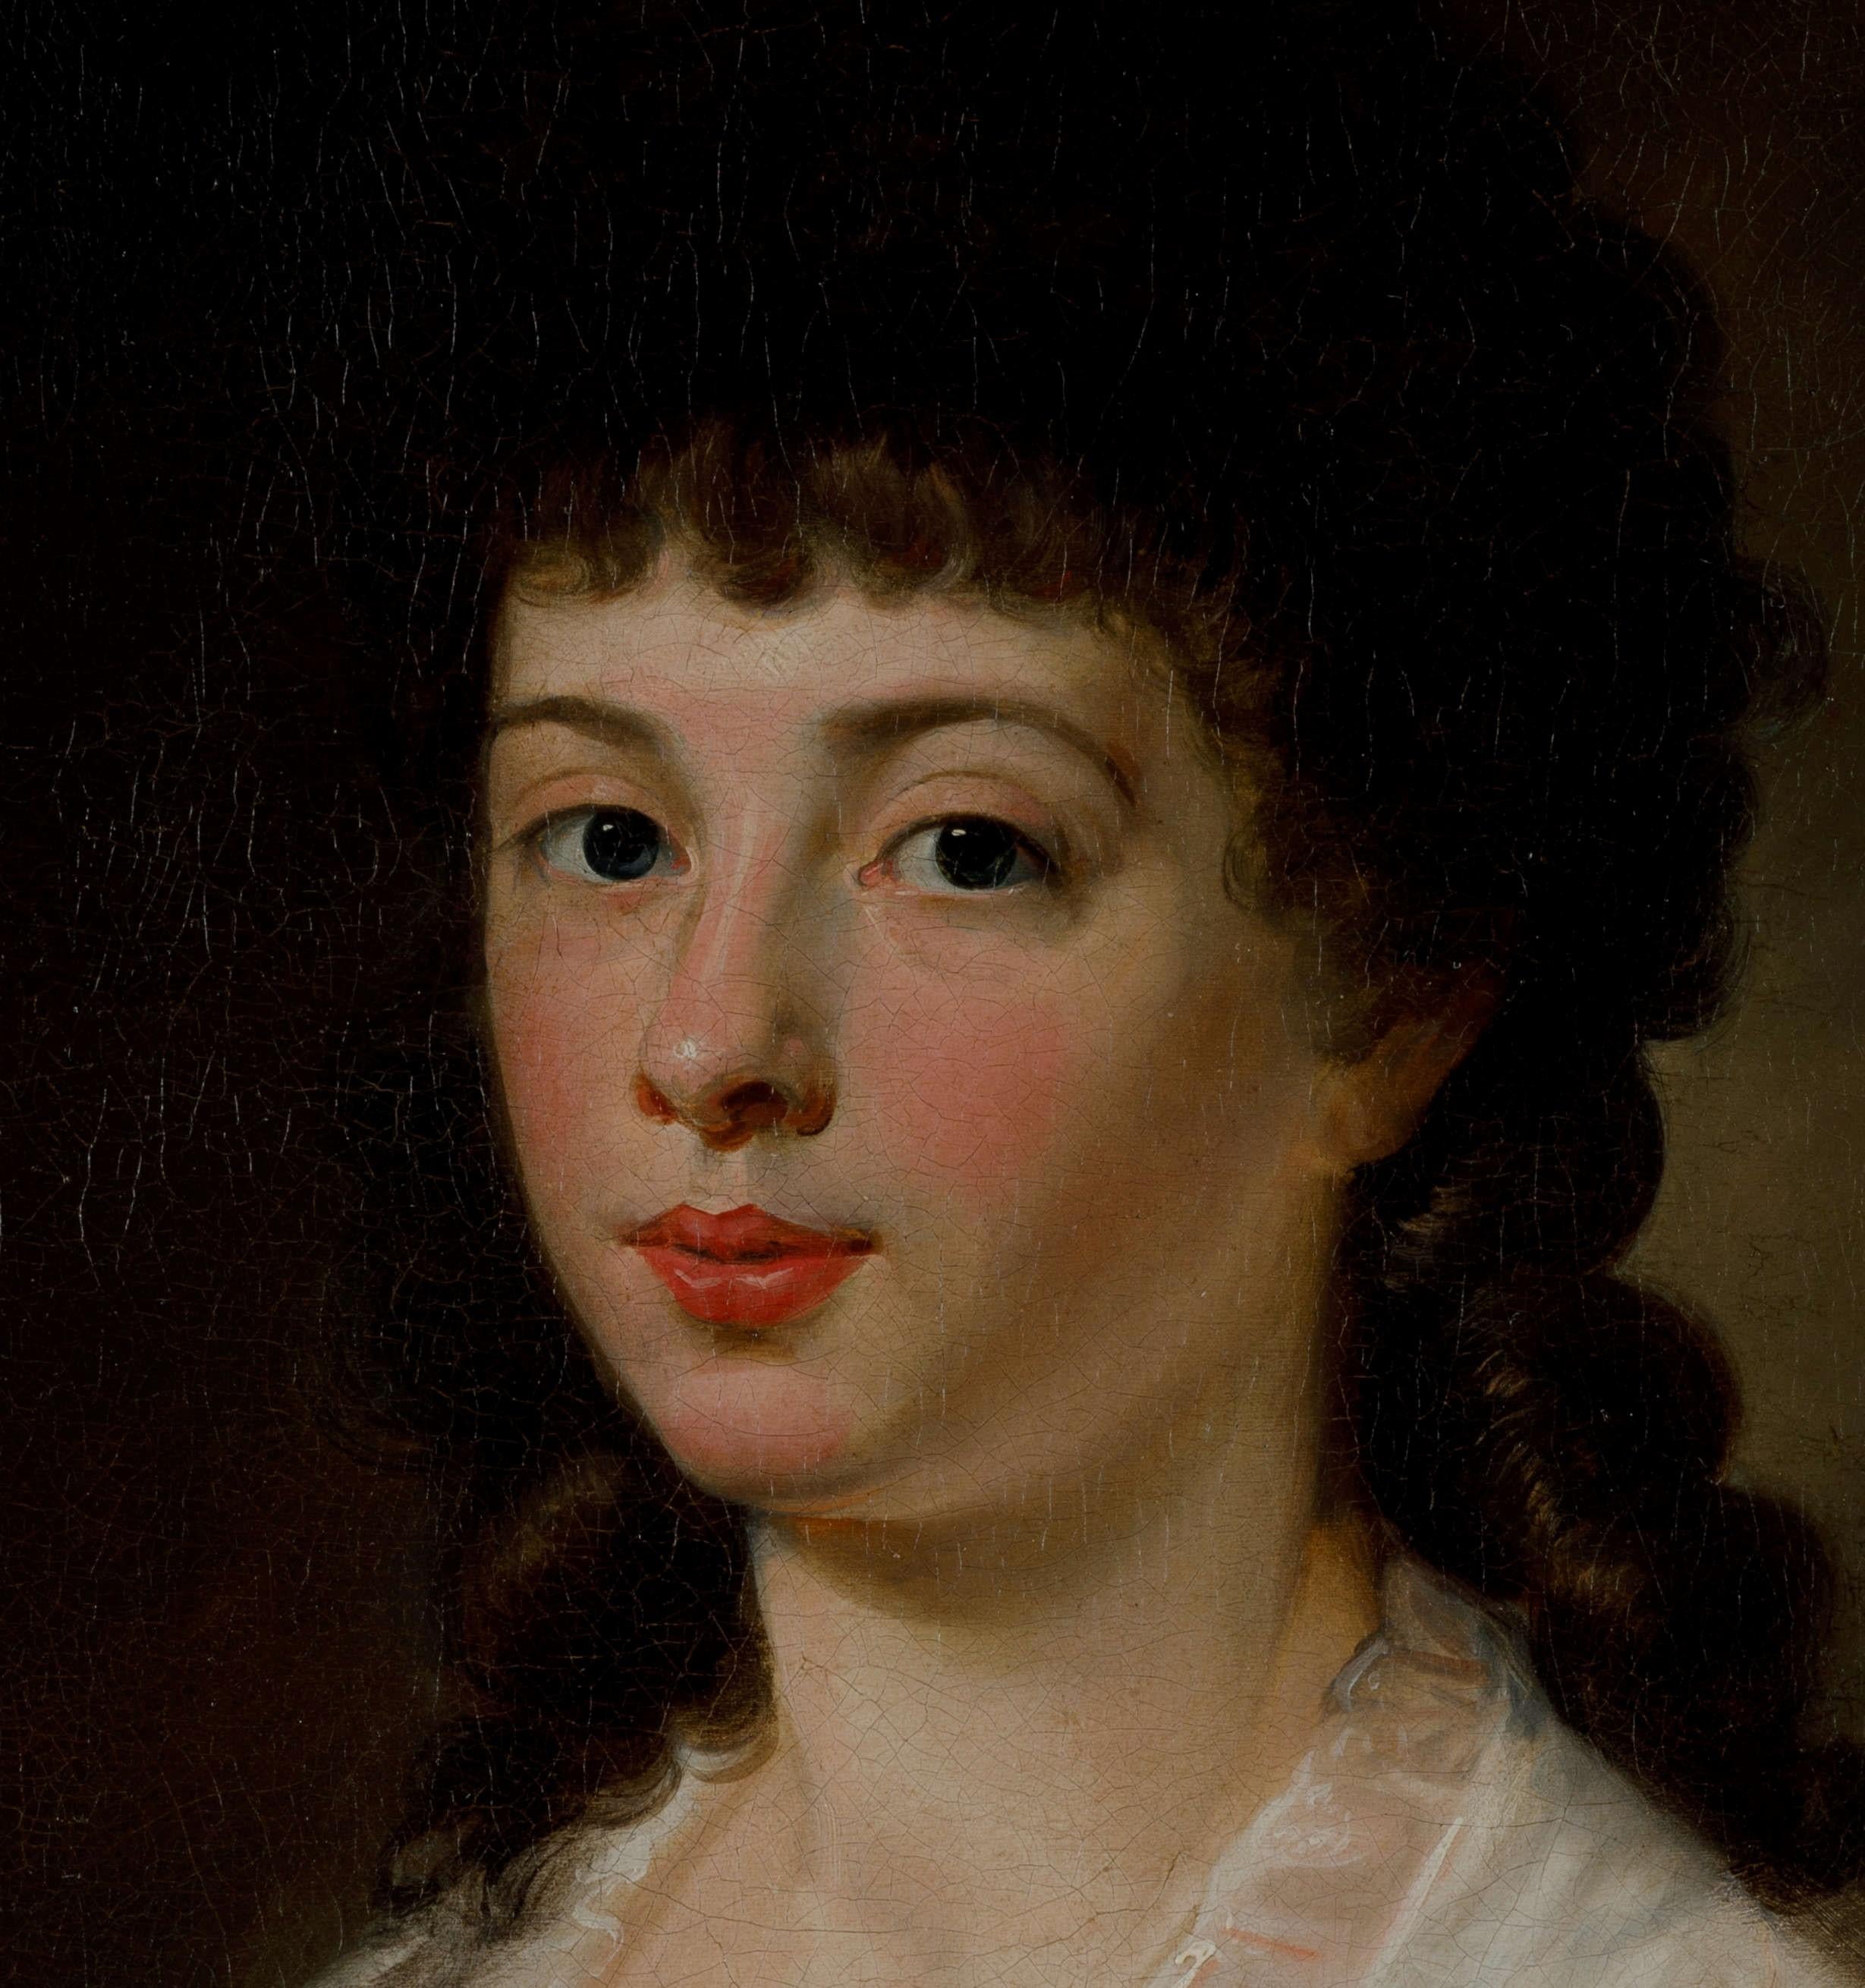 18th century women